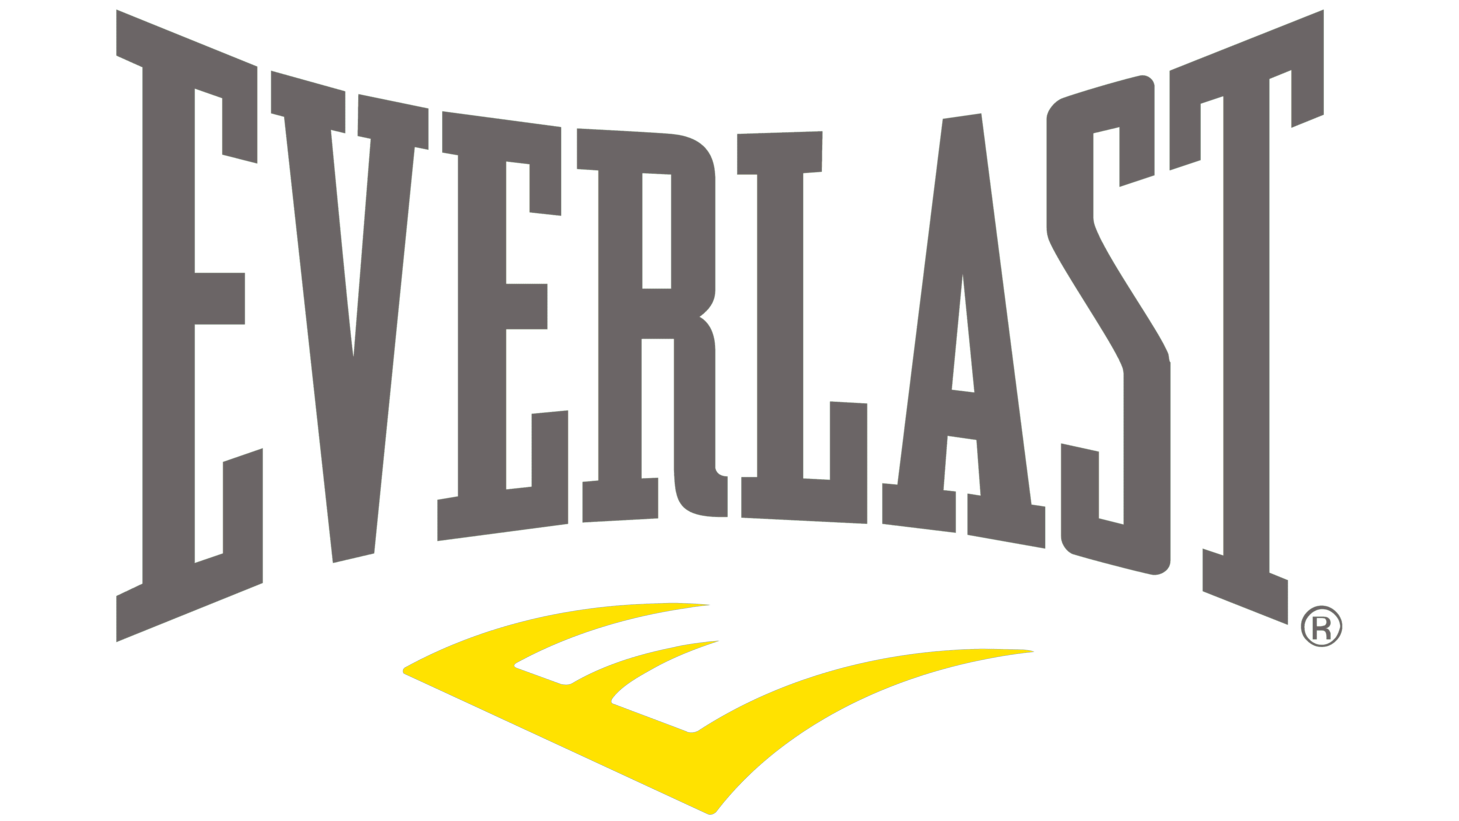 Everlast sign